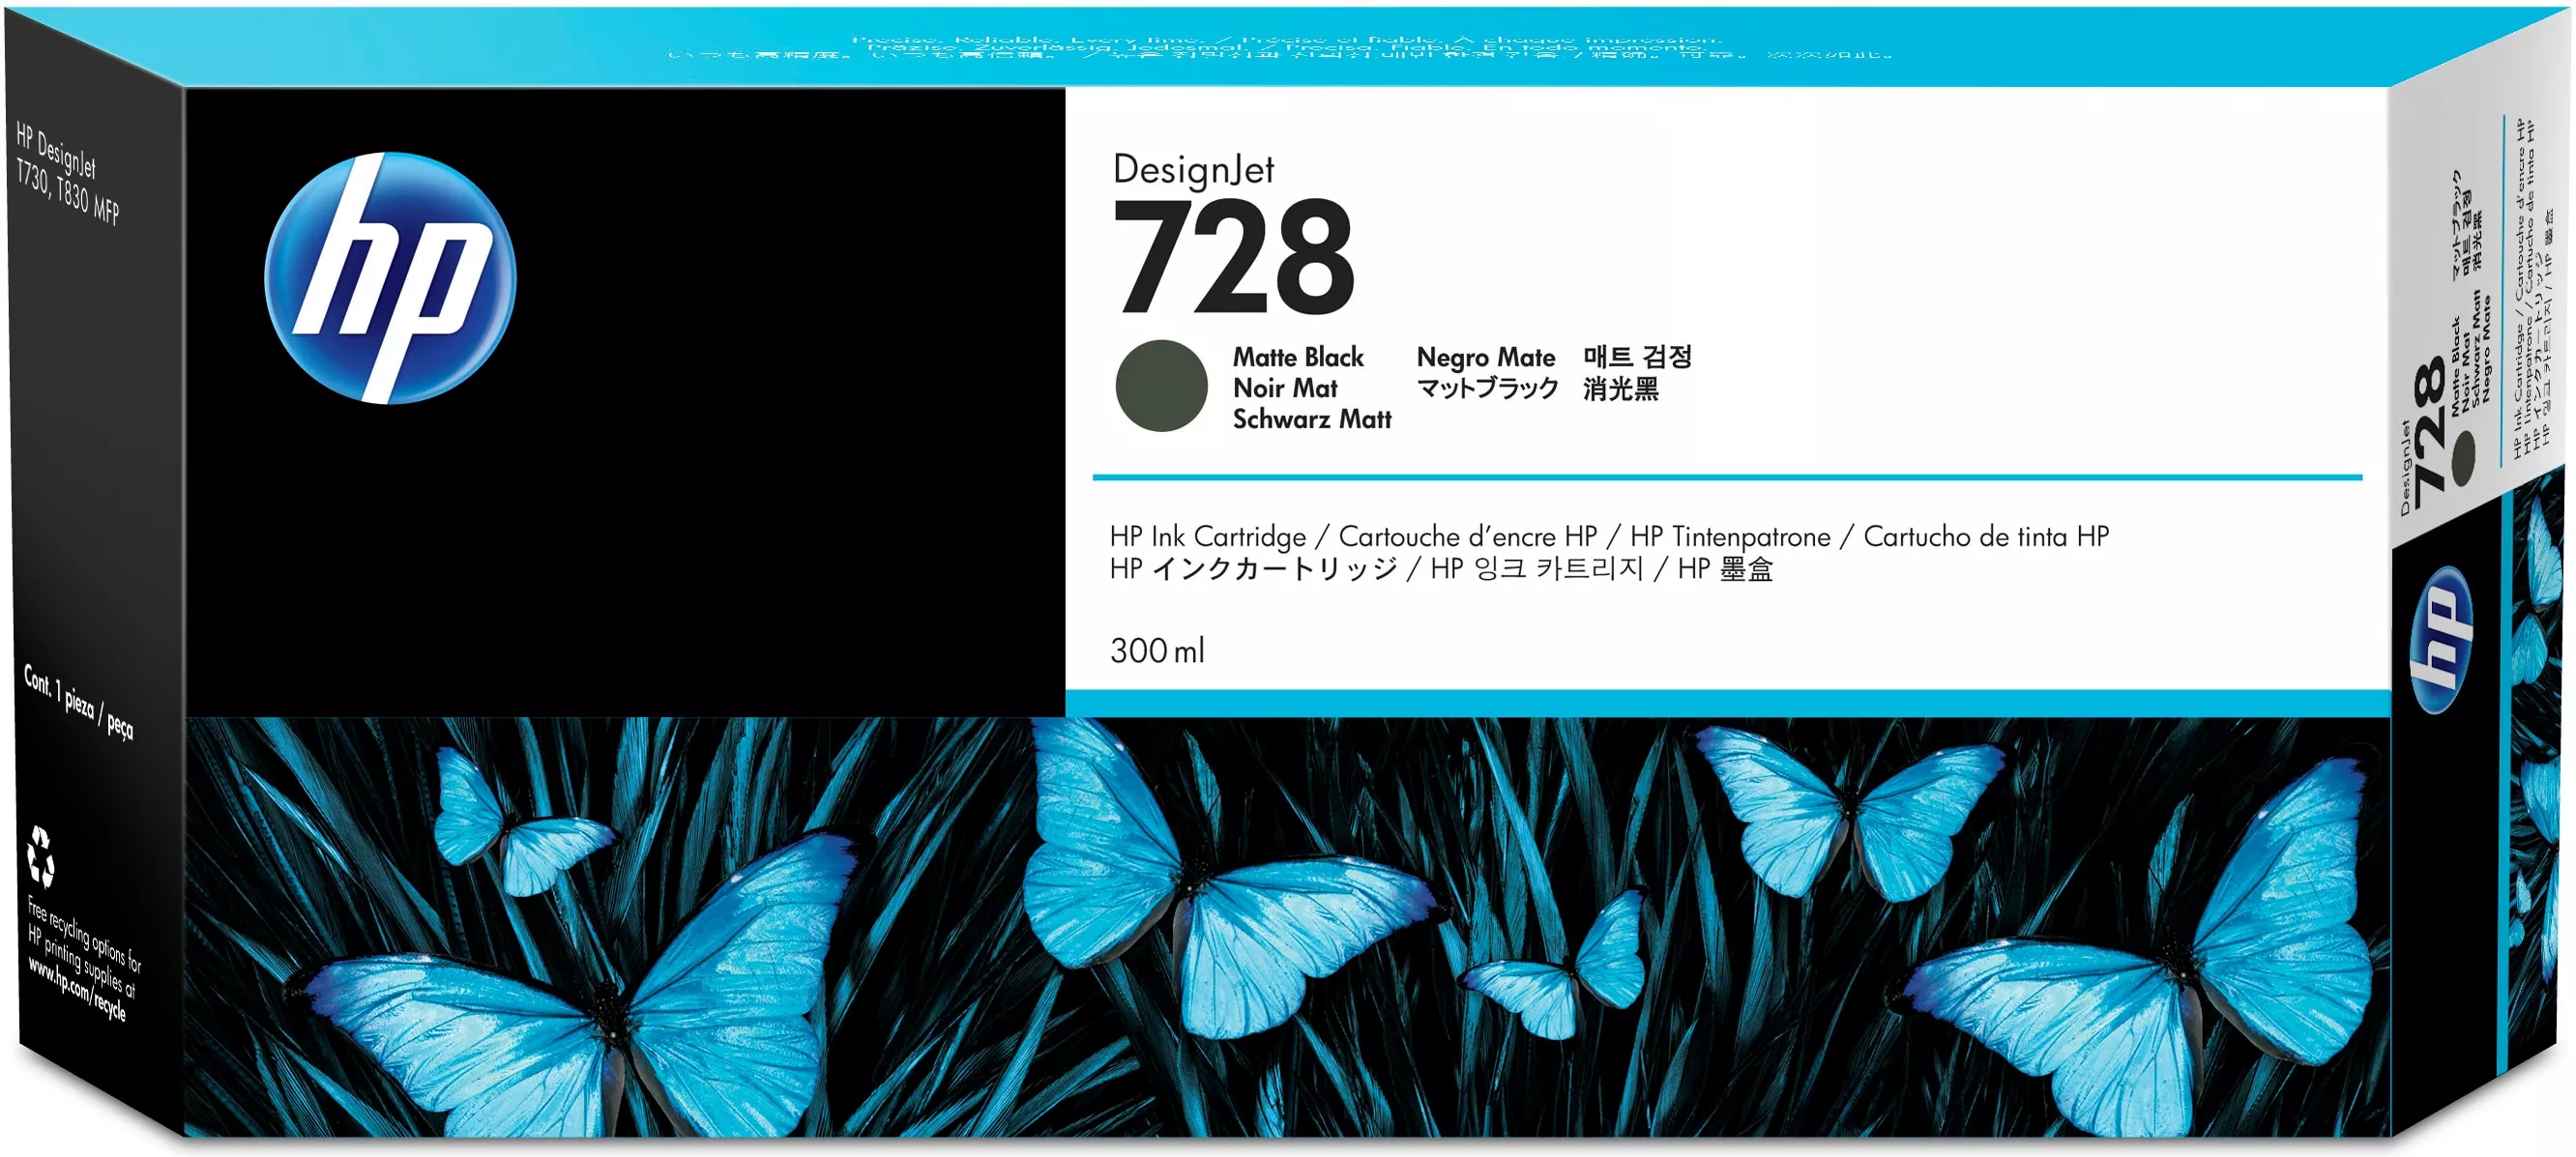 Vente HP 728 original 300-ml Matte Black Ink cartridge HP au meilleur prix - visuel 2